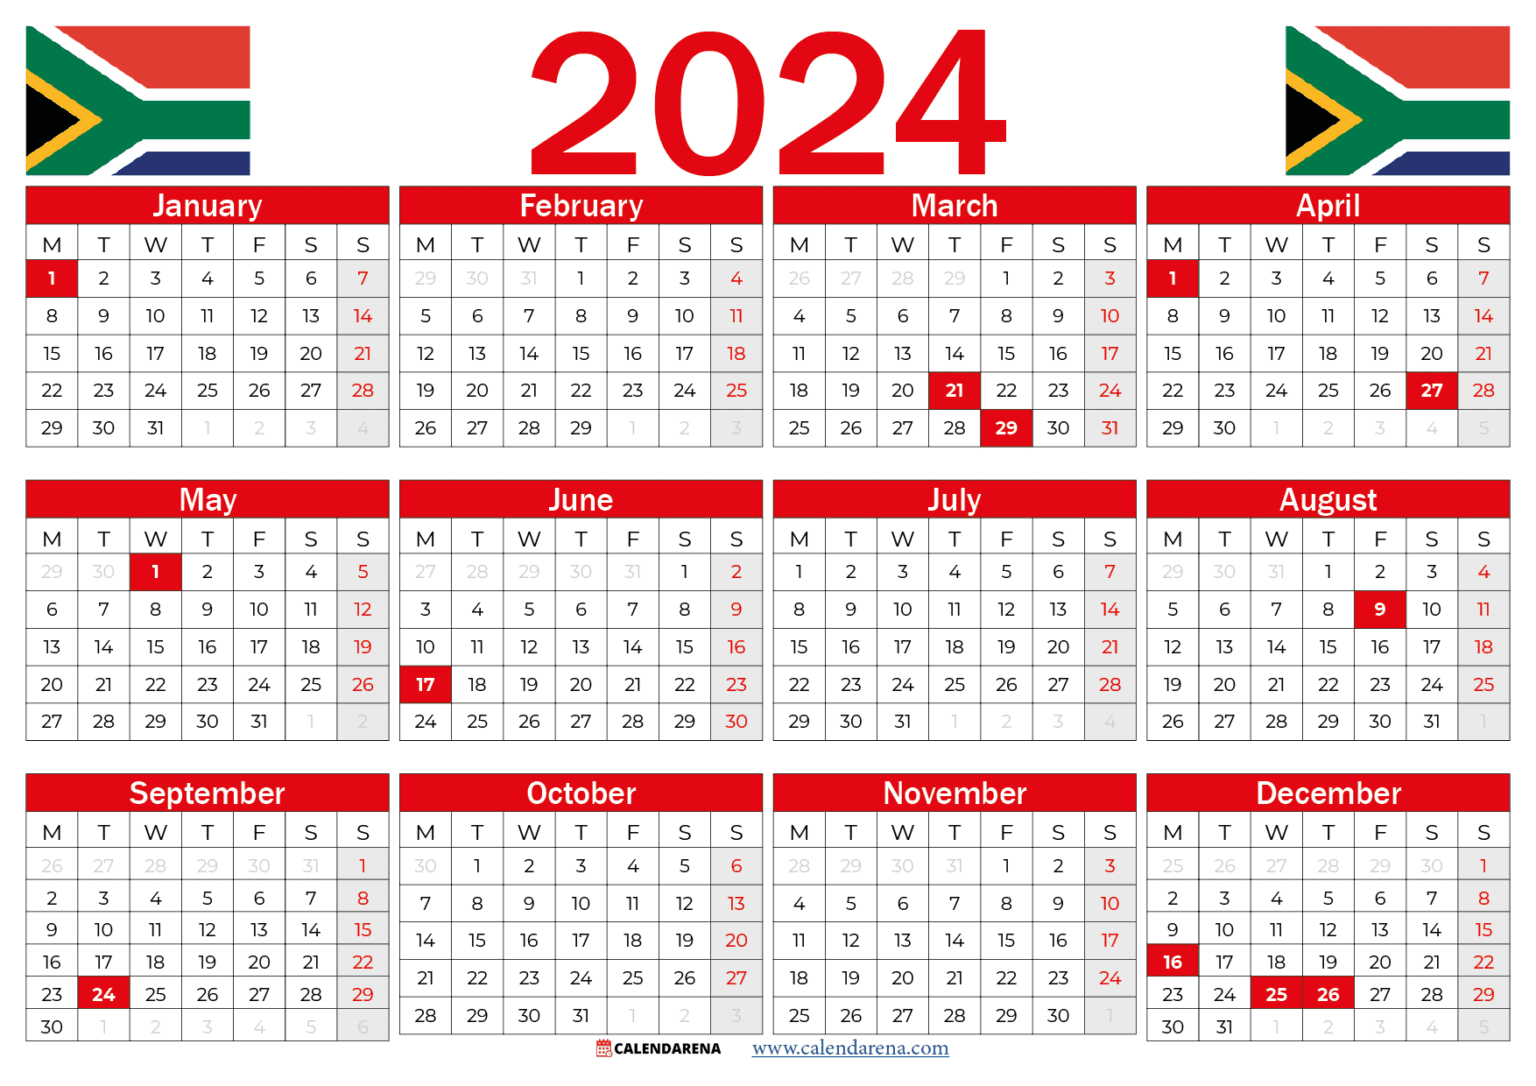 south-africa-2023-calendar-with-holidays-printable